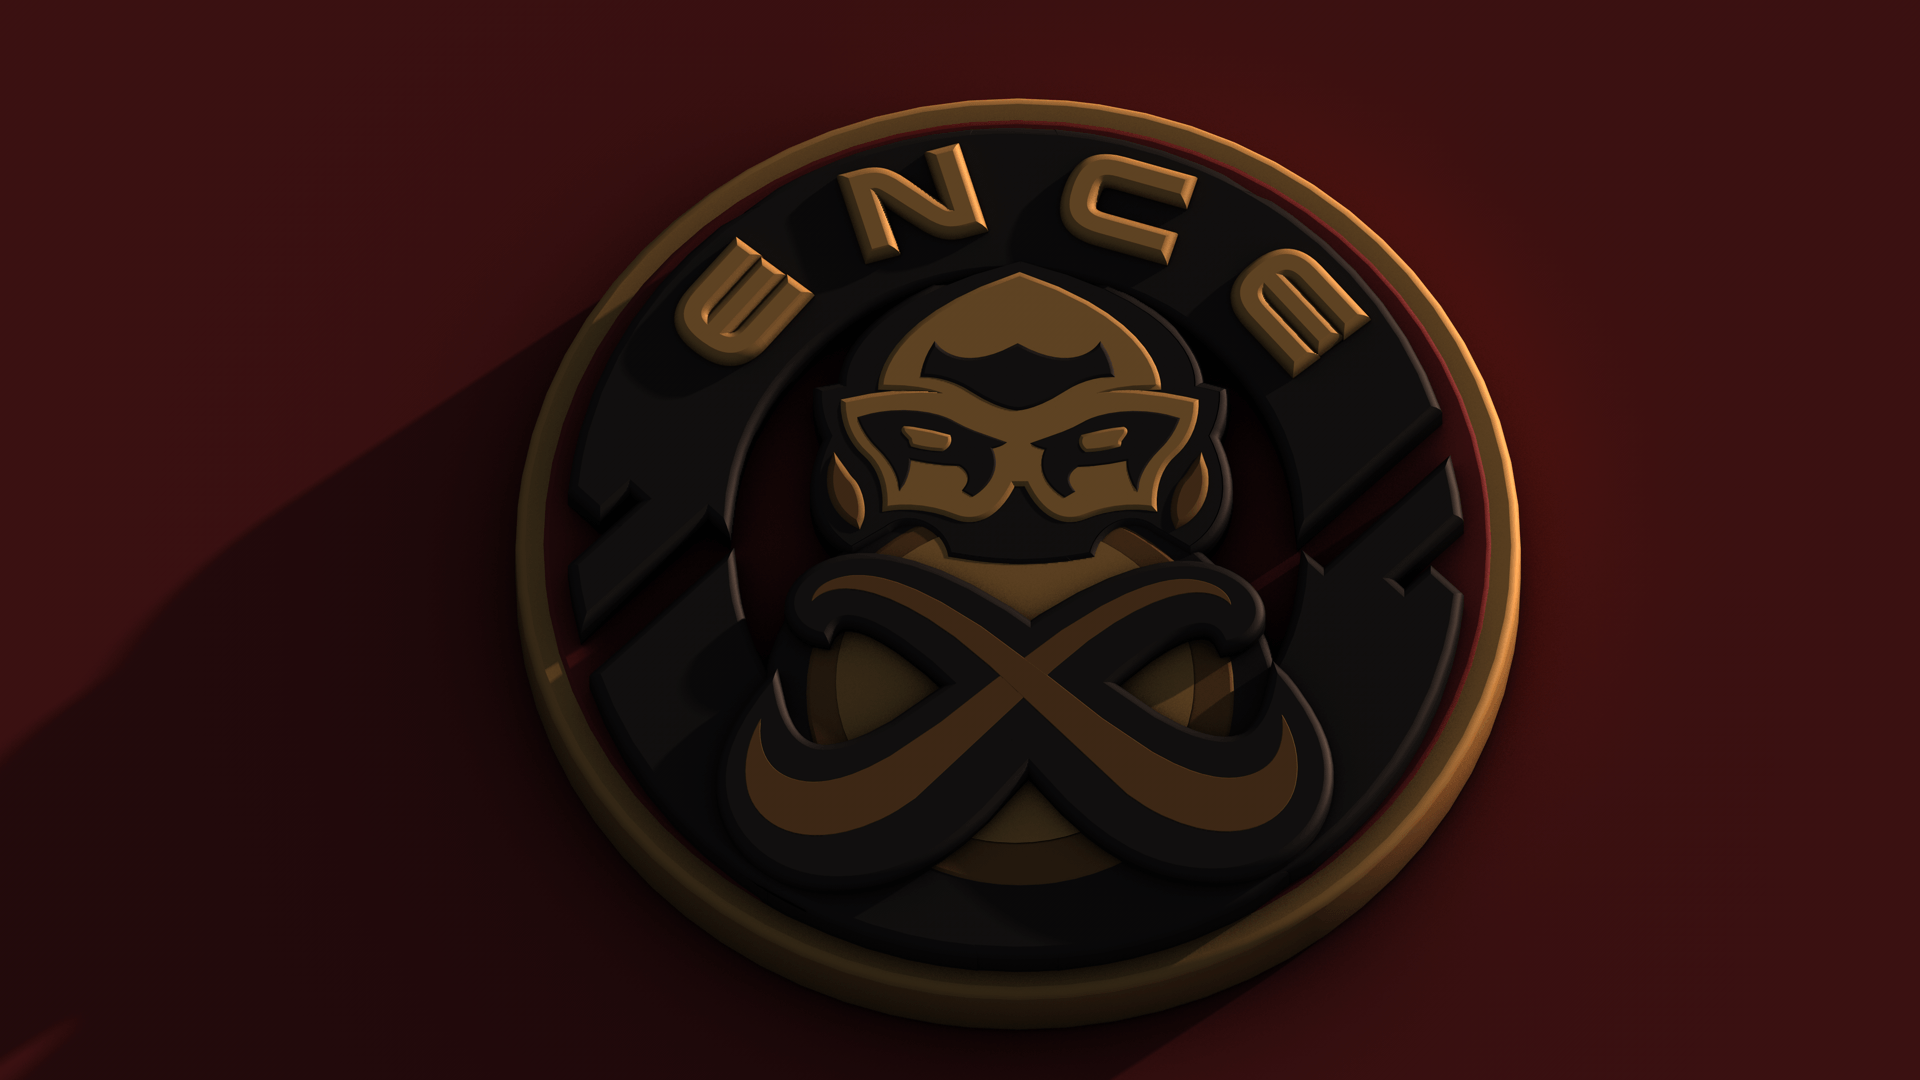 ENCE eSports 3D logo. CS:GO Wallpaper and Background